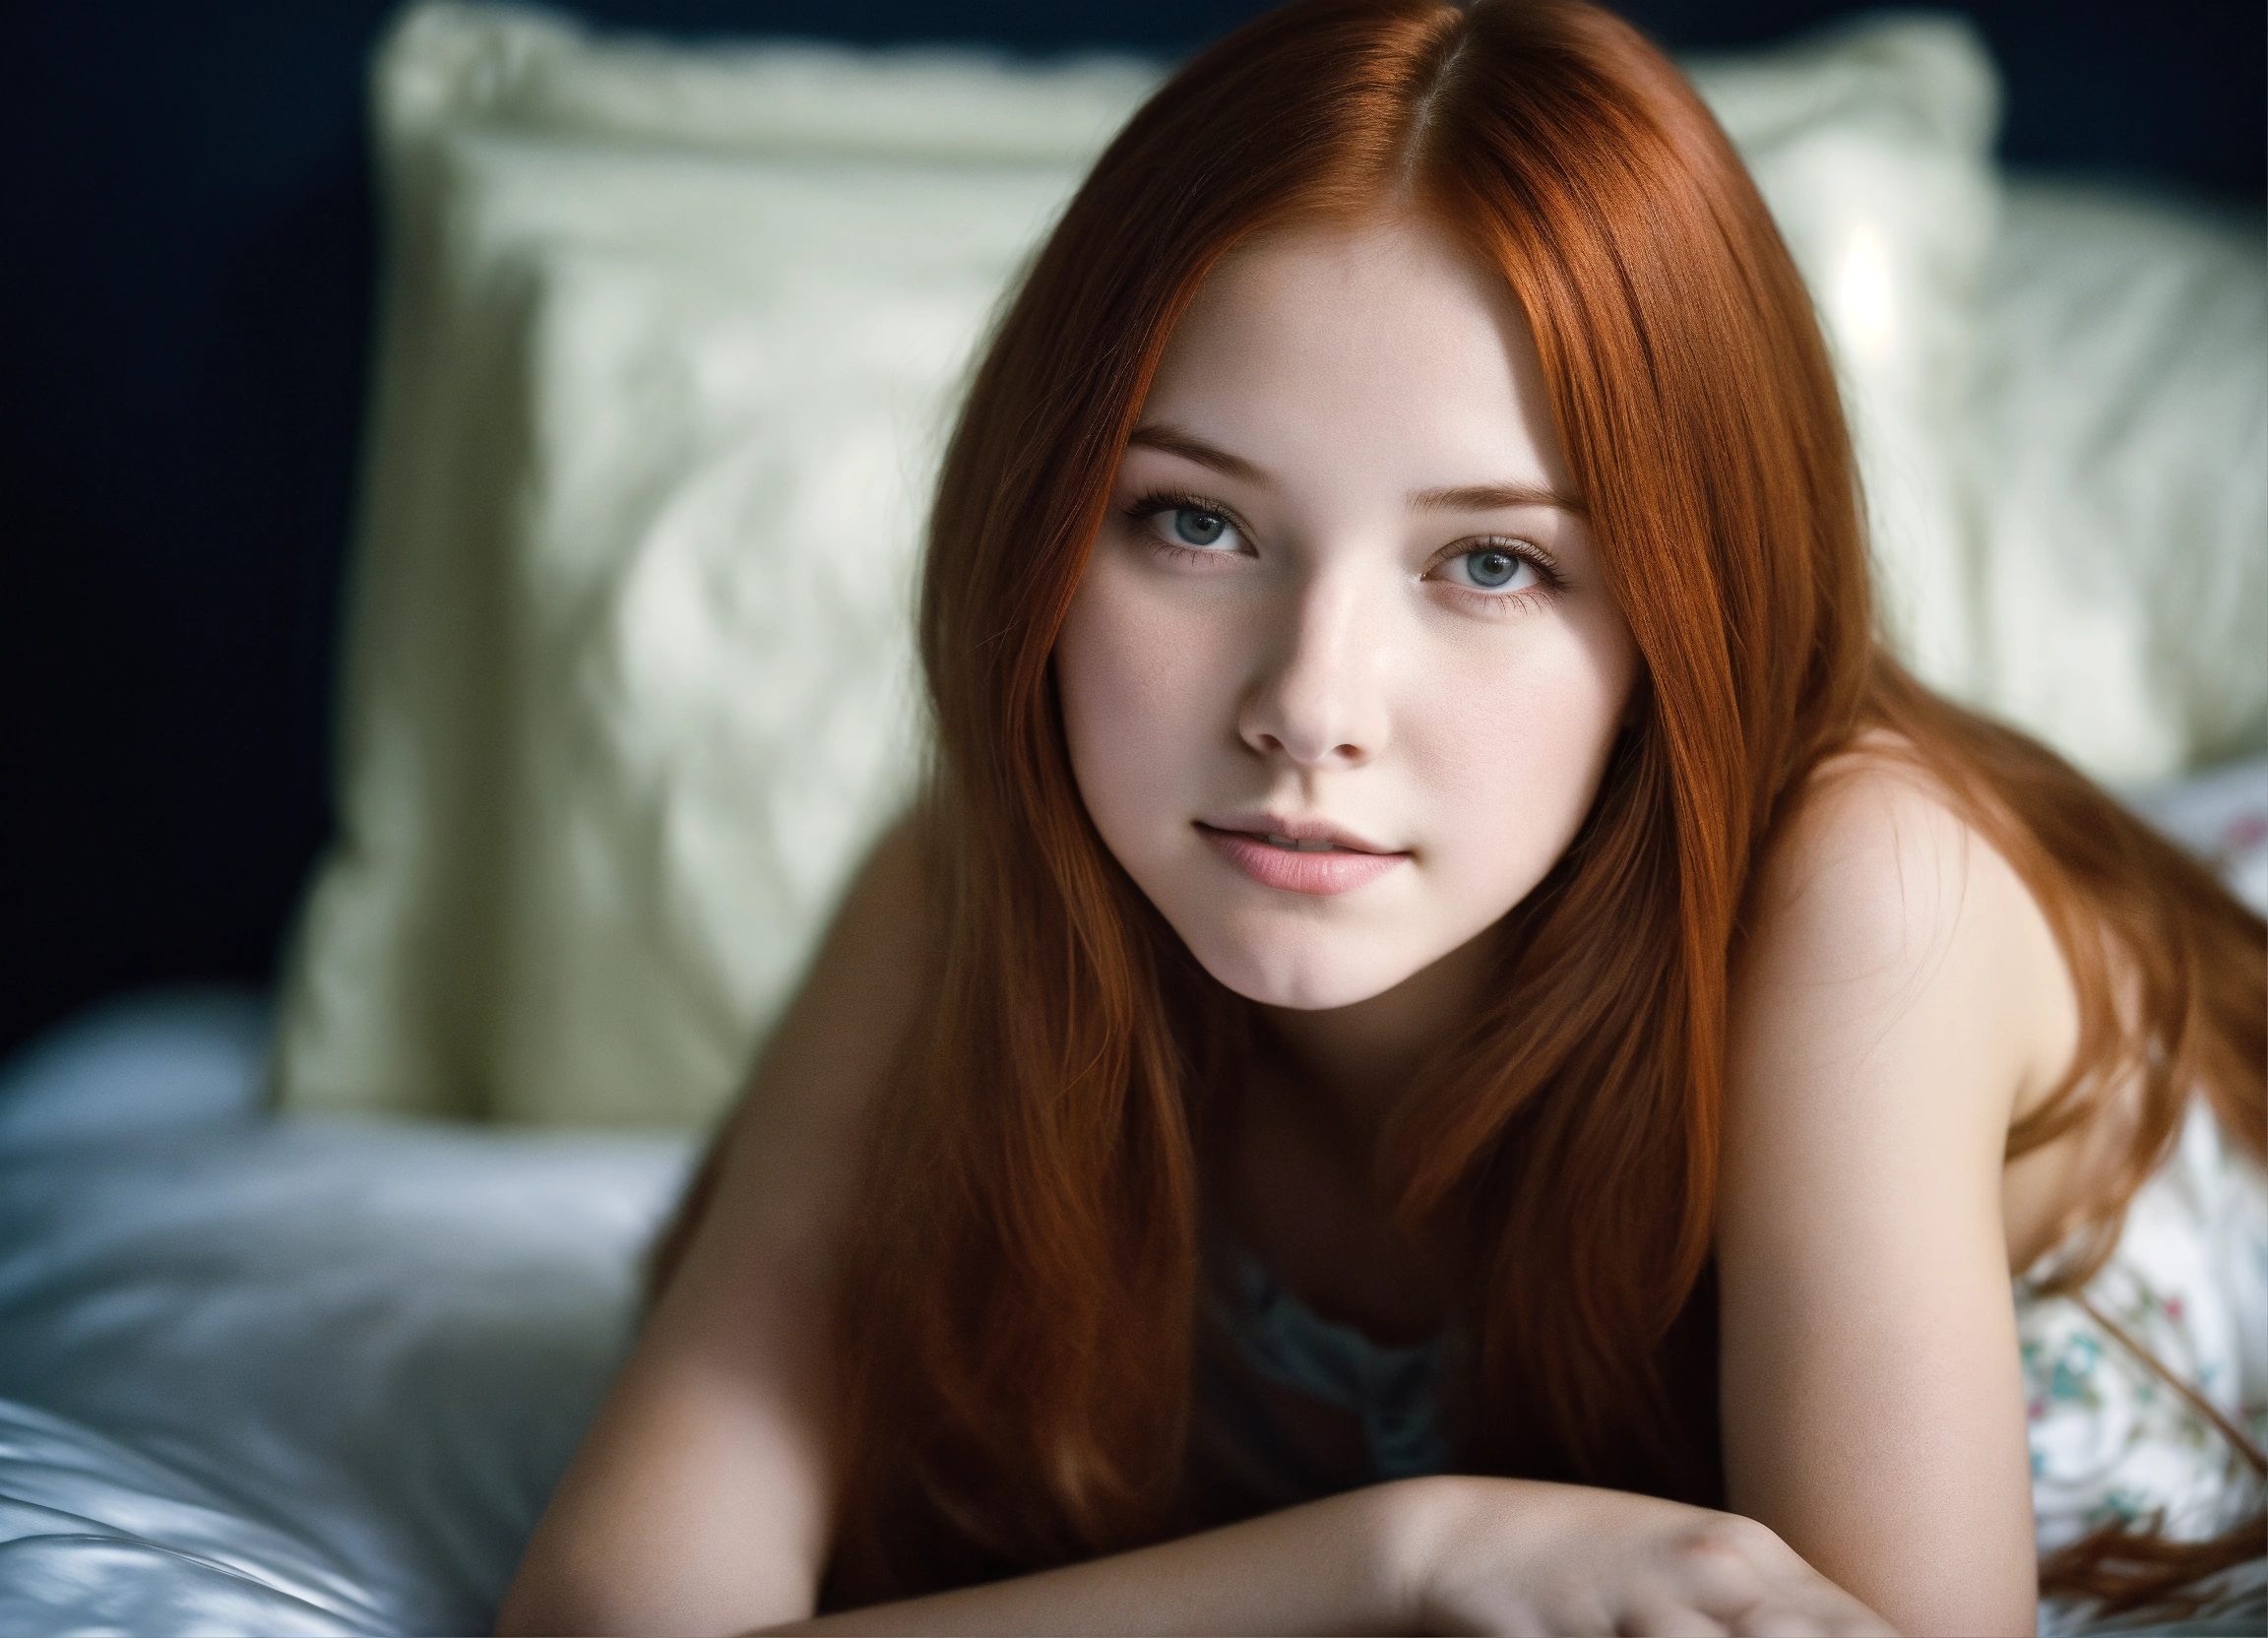 Lexica - Very pretty tween redhead girl, straight hair, centre parting ...